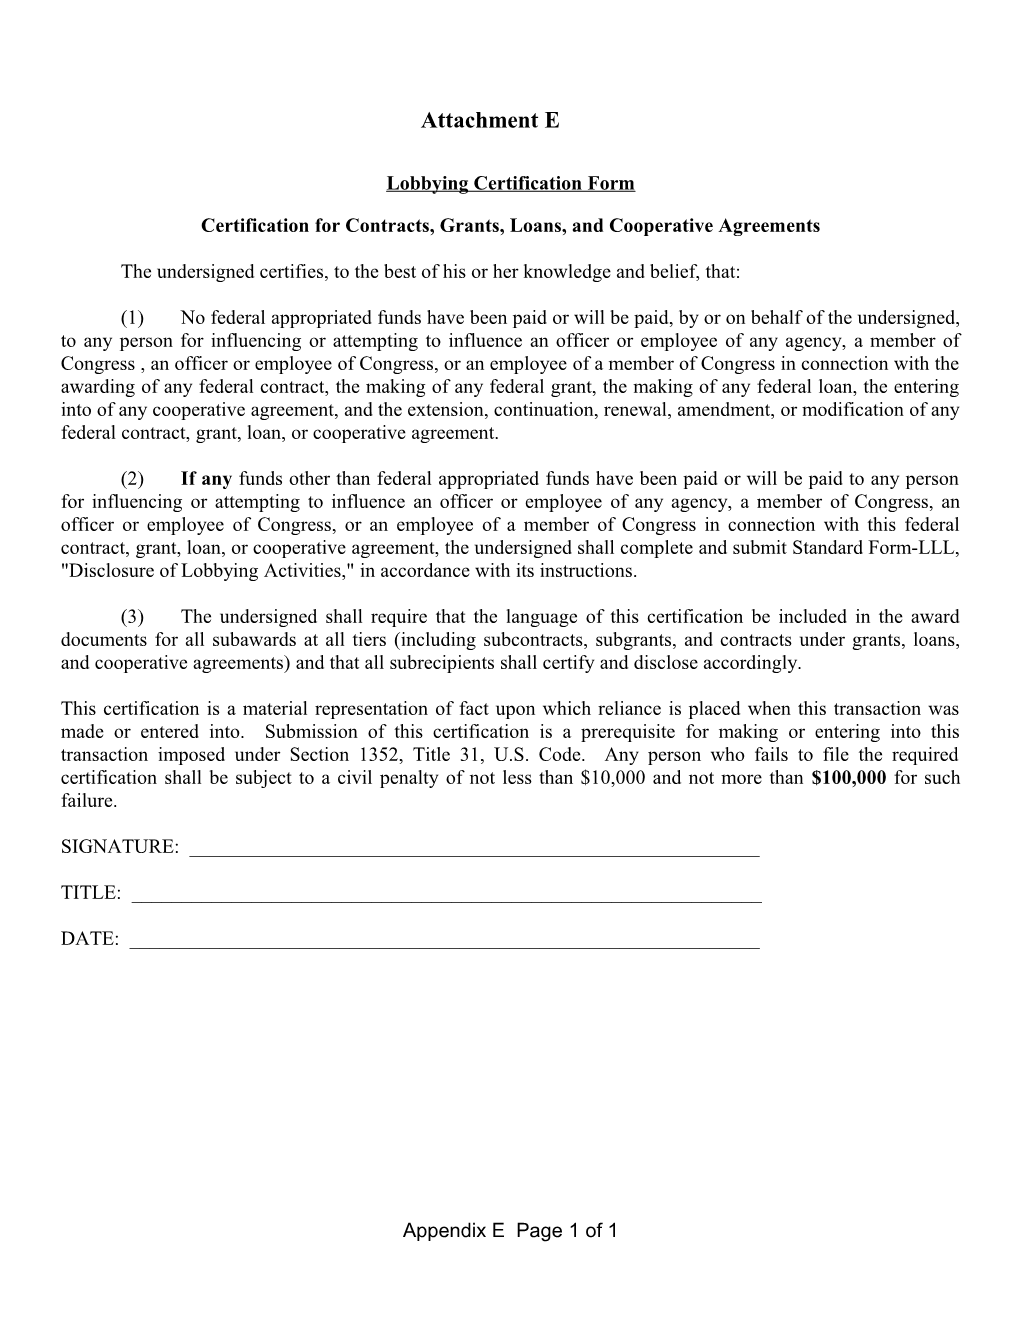 Lobbying Certification Form